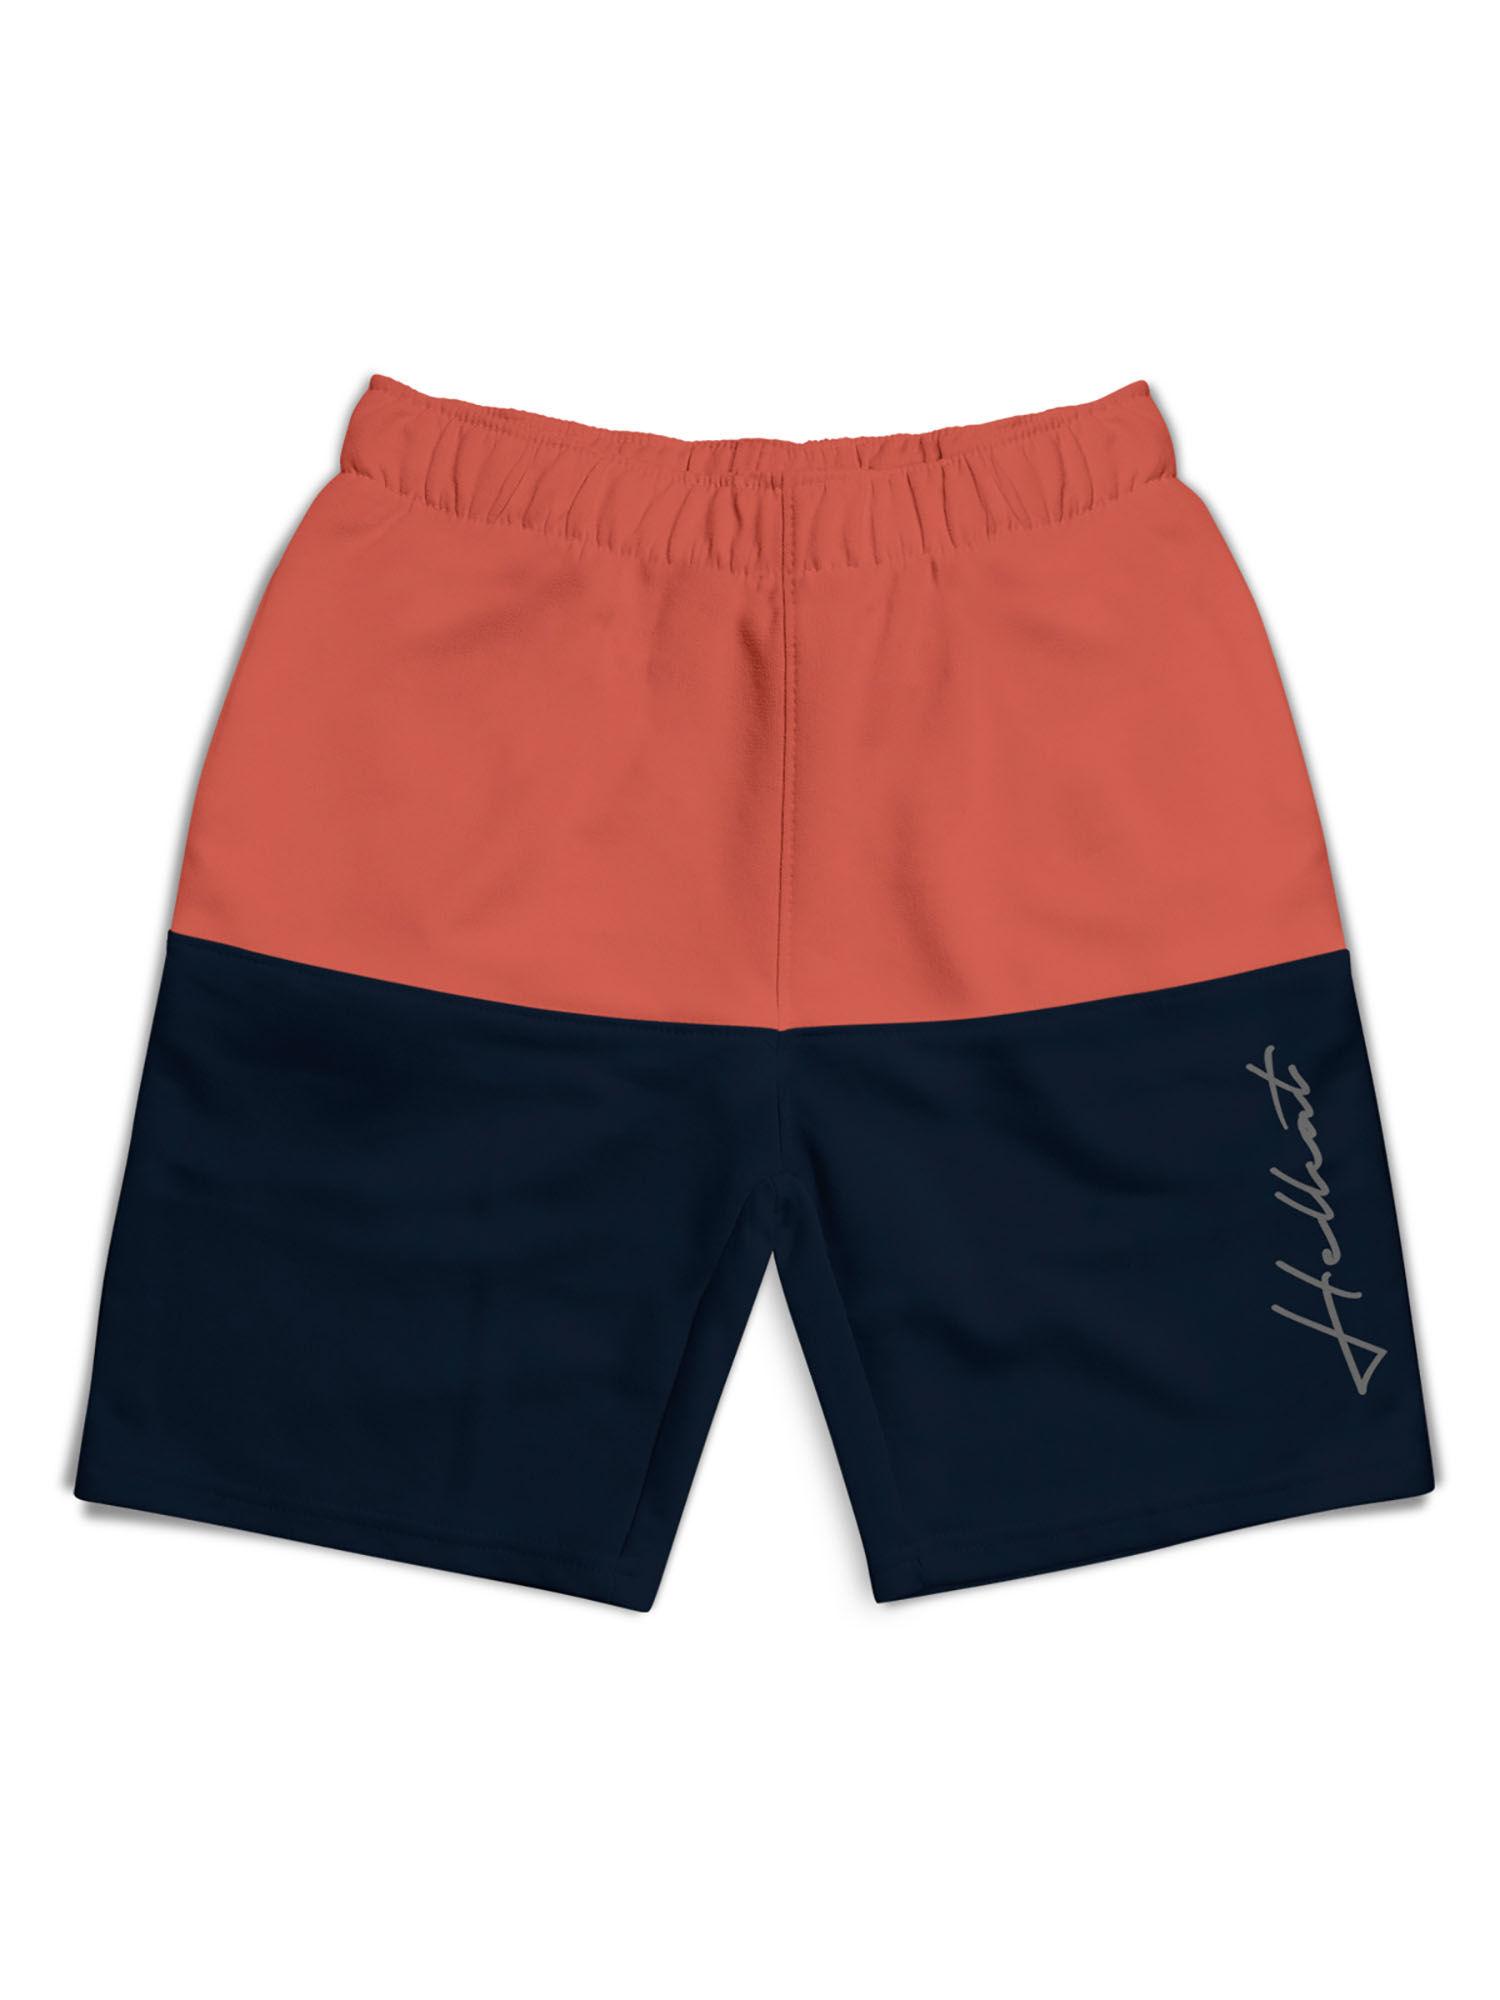 saffron-colorblocked-mid-rise-shorts-for-boys